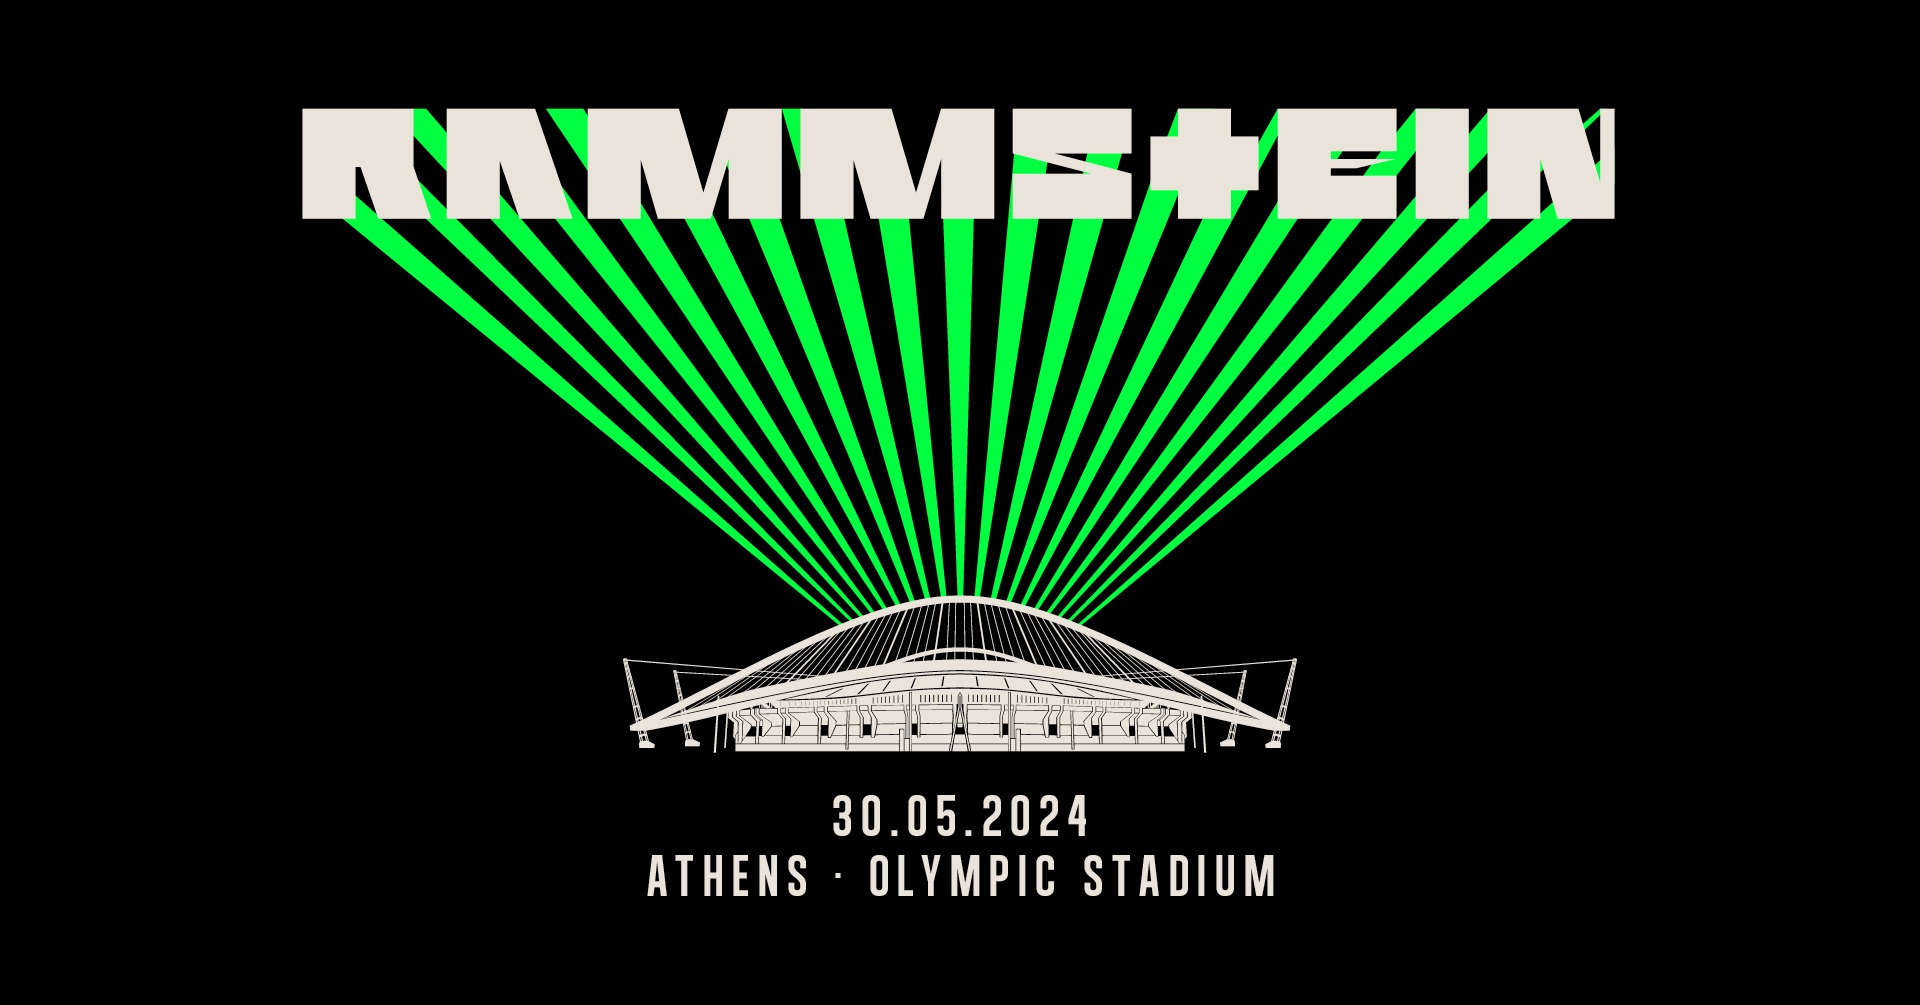 Rammstein - Η συναυλία μεταφέρεται εντός Ολυμπιακού Σταδίου!